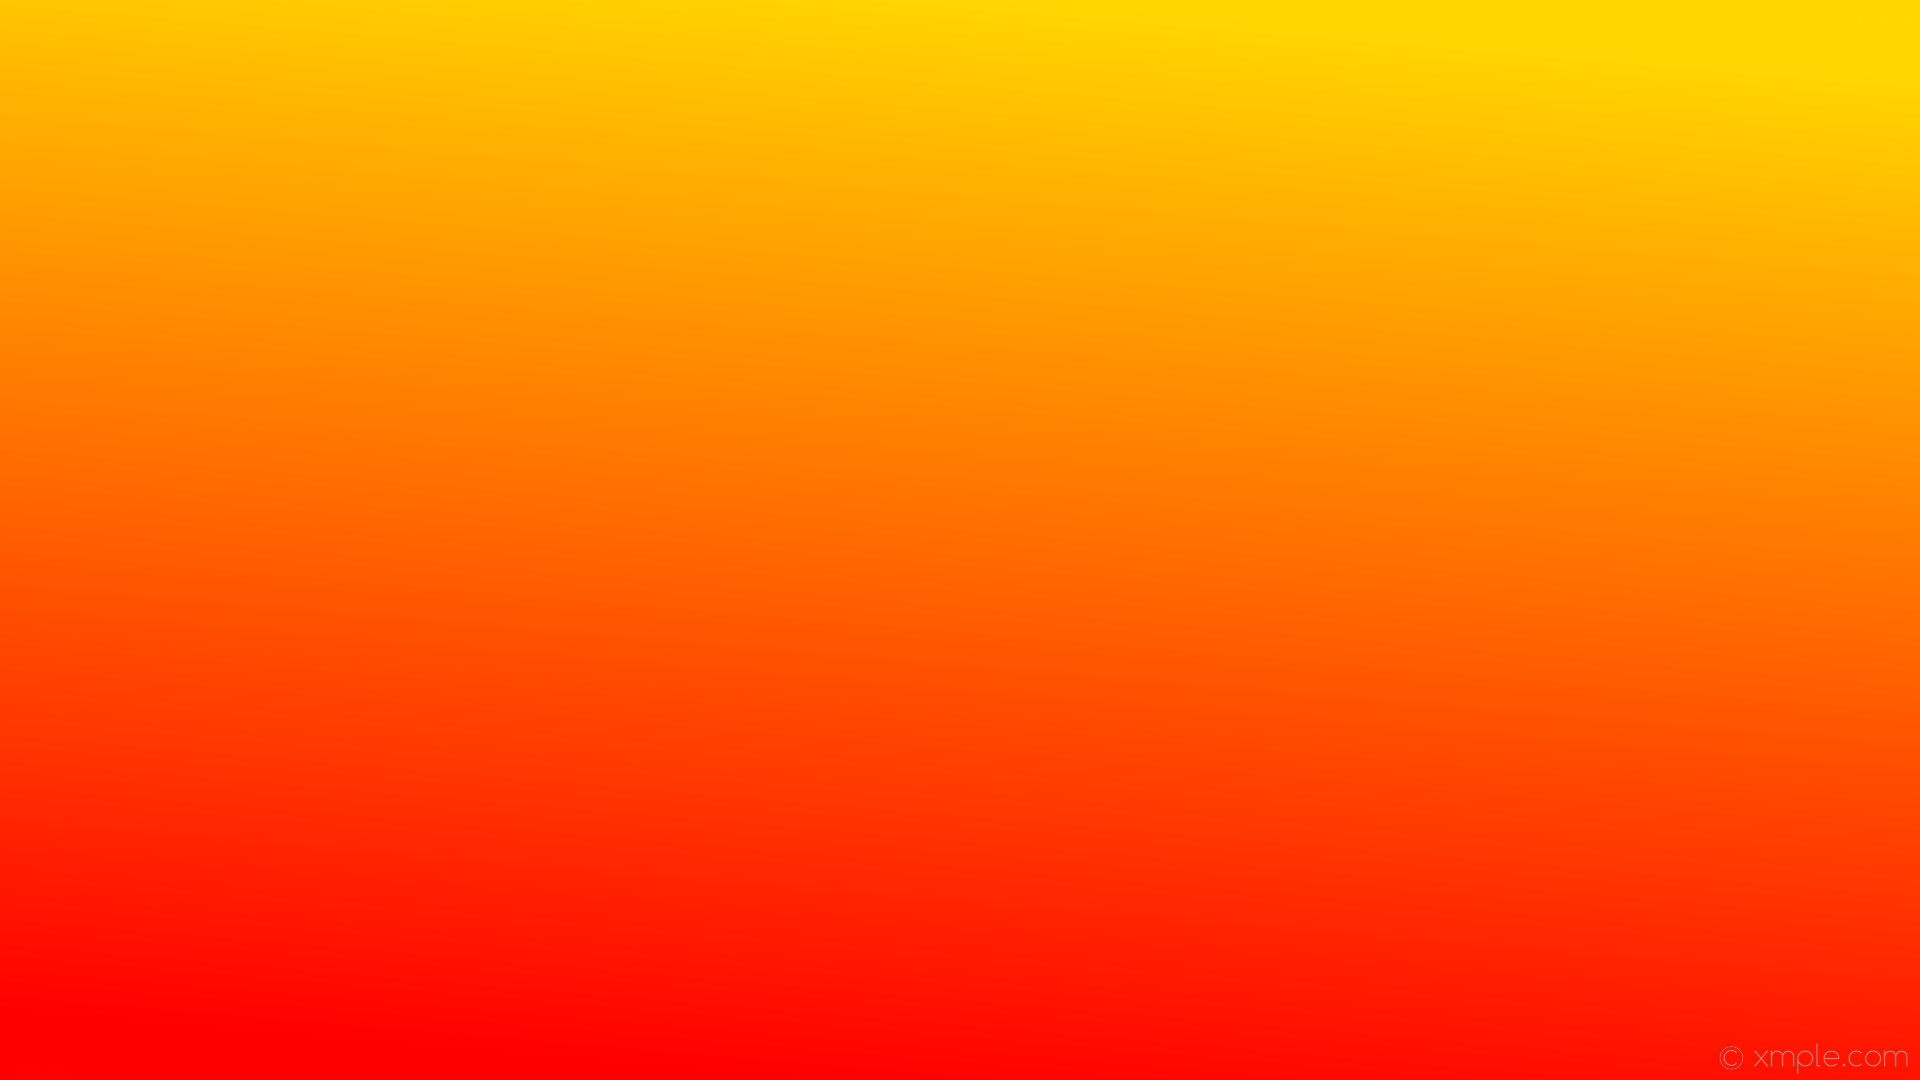 1920x1080 wallpaper gradient red linear yellow gold #ff0000 #ffd700 255Â°